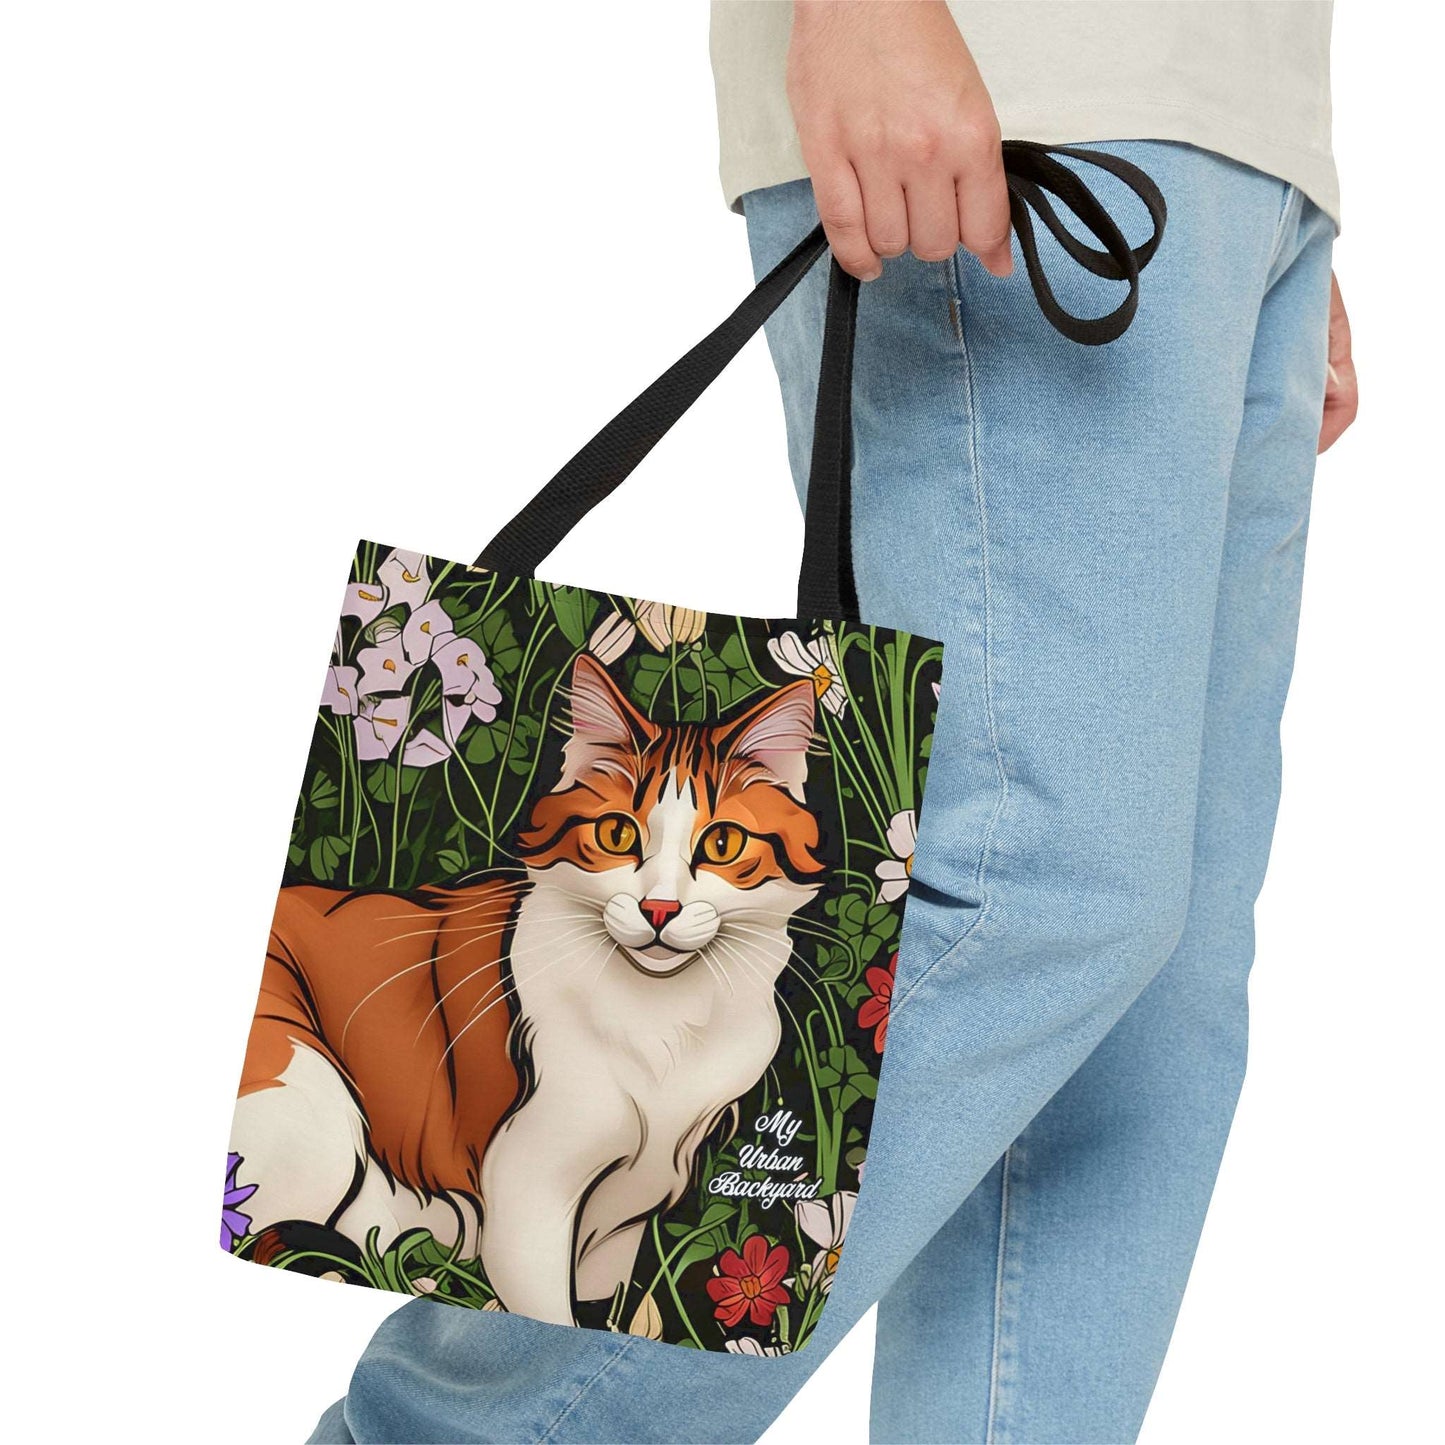 Everyday Tote Bag w Cotton Handles, Reusable Shoulder Bag, Orange Cat w Flowers